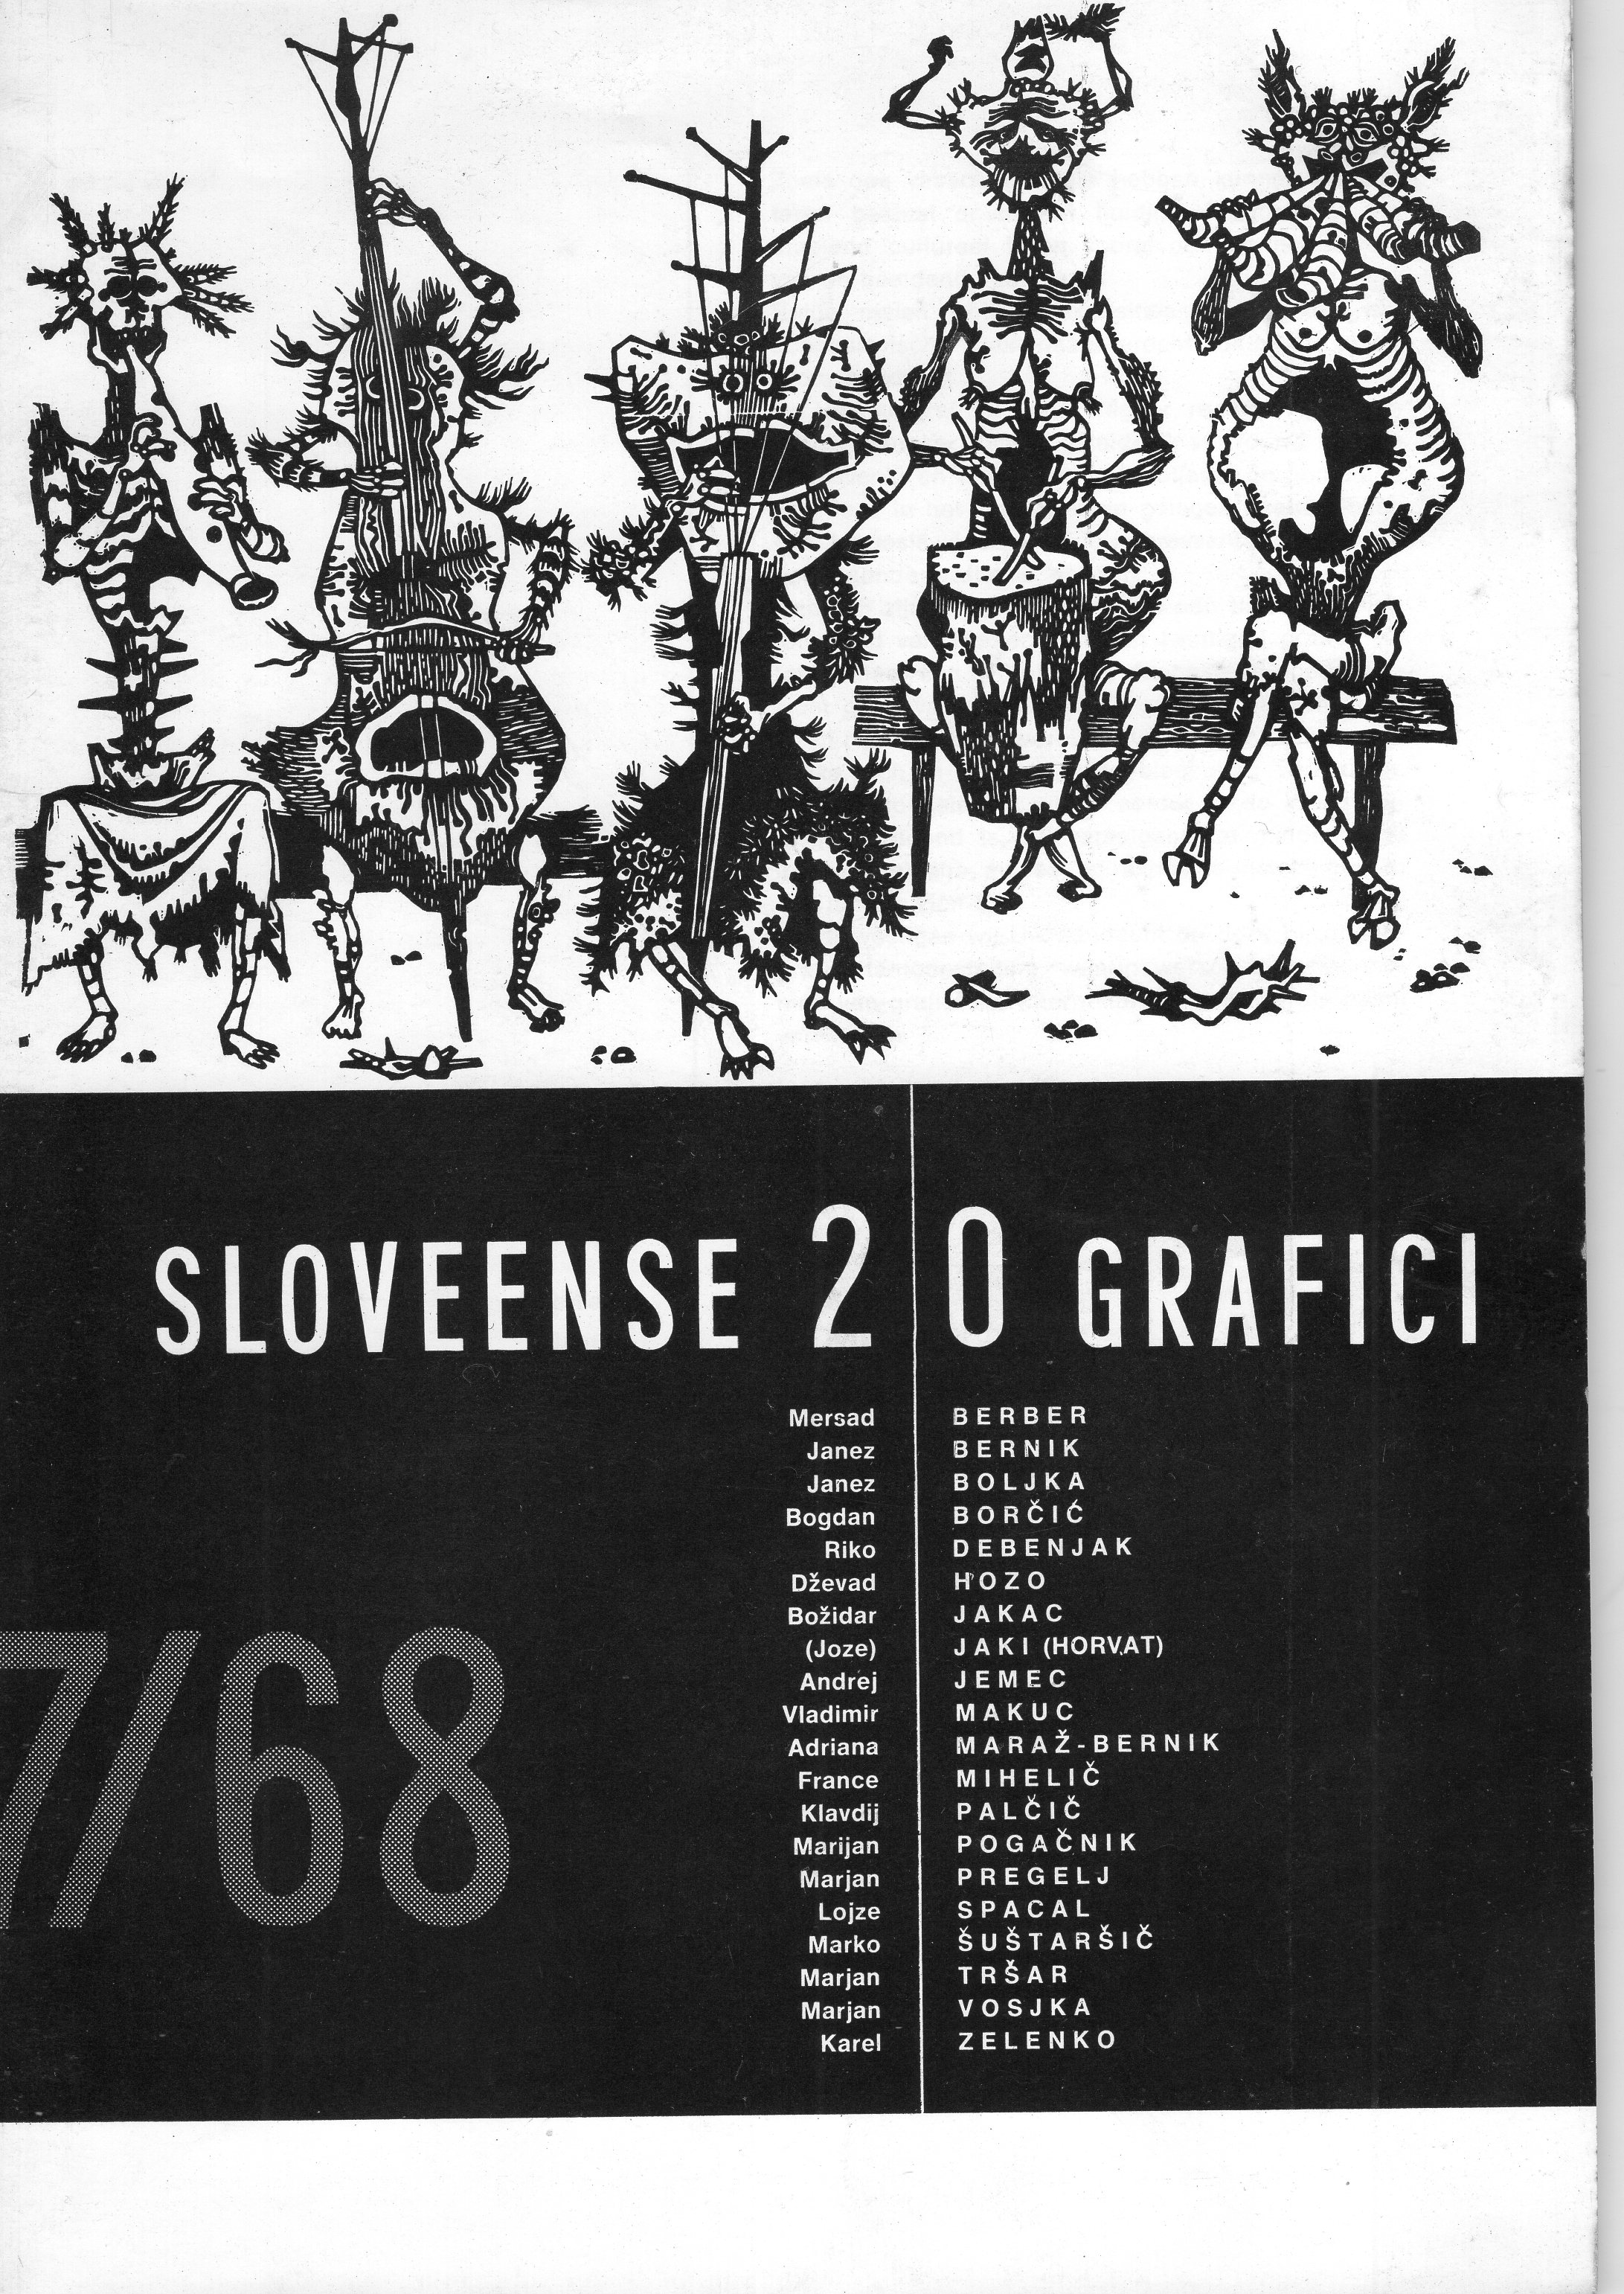 Krzisnik, Zoran - Sloveense grafici, 20 Sloveese grafici